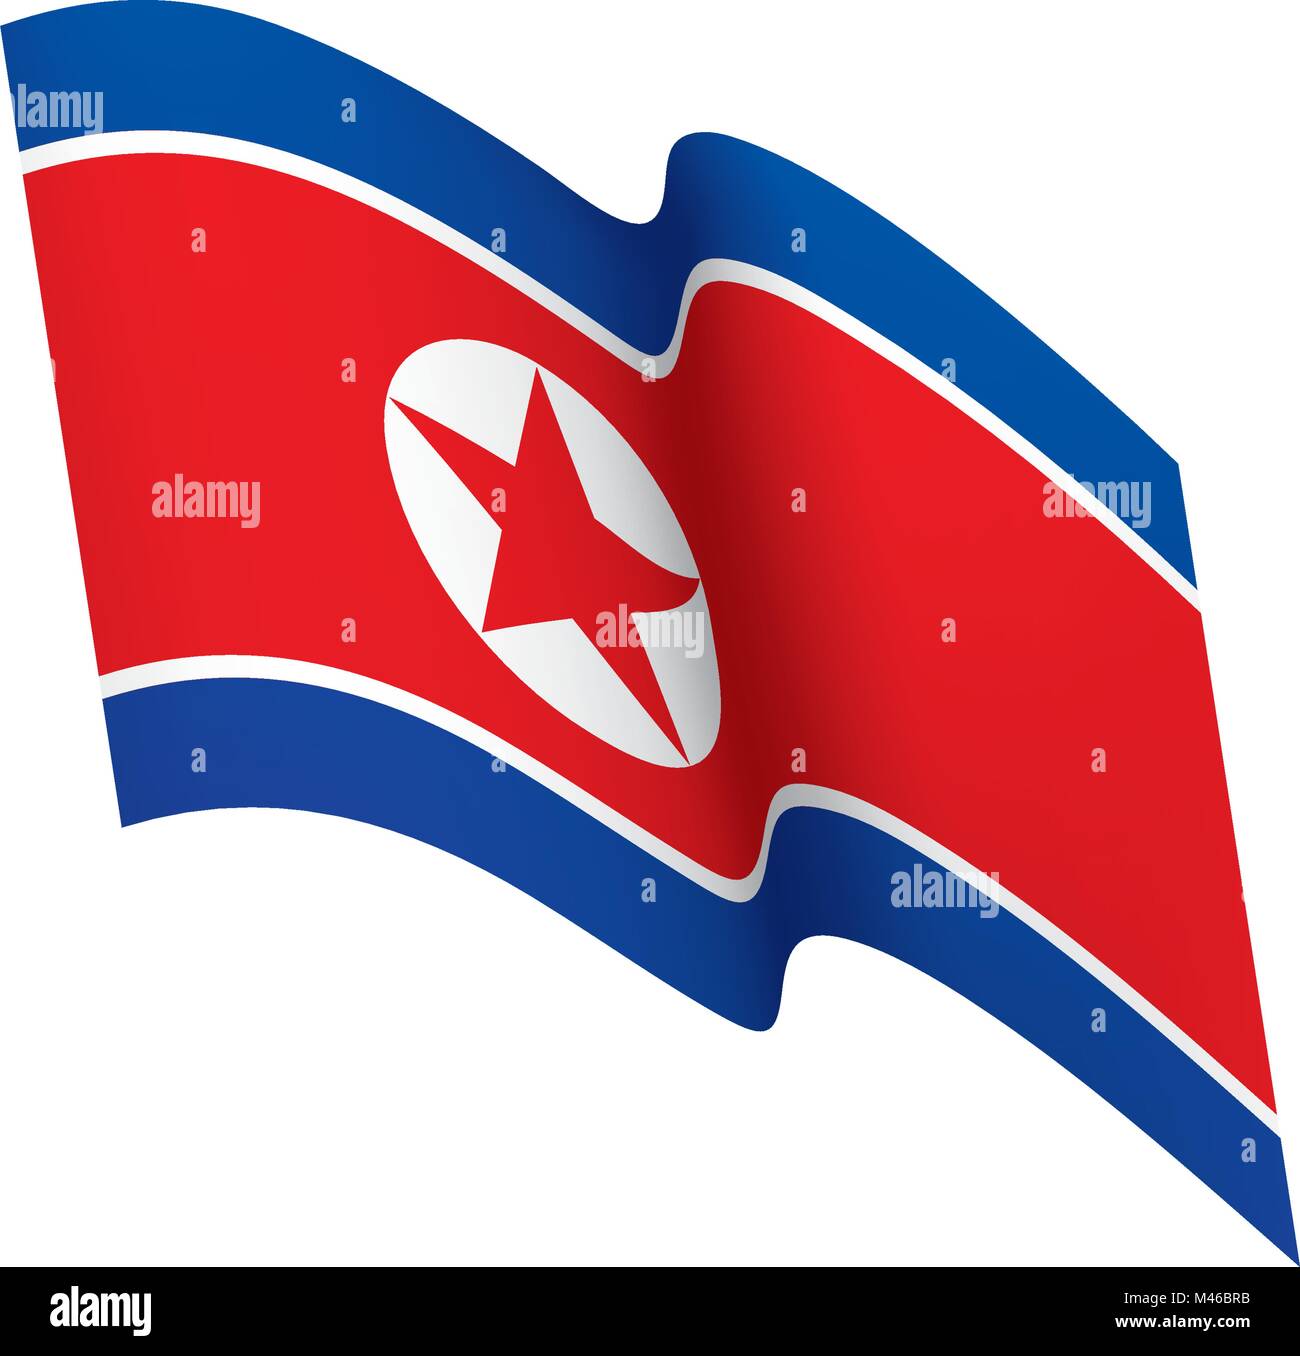 North Korea flag, vector illustration Stock Vector